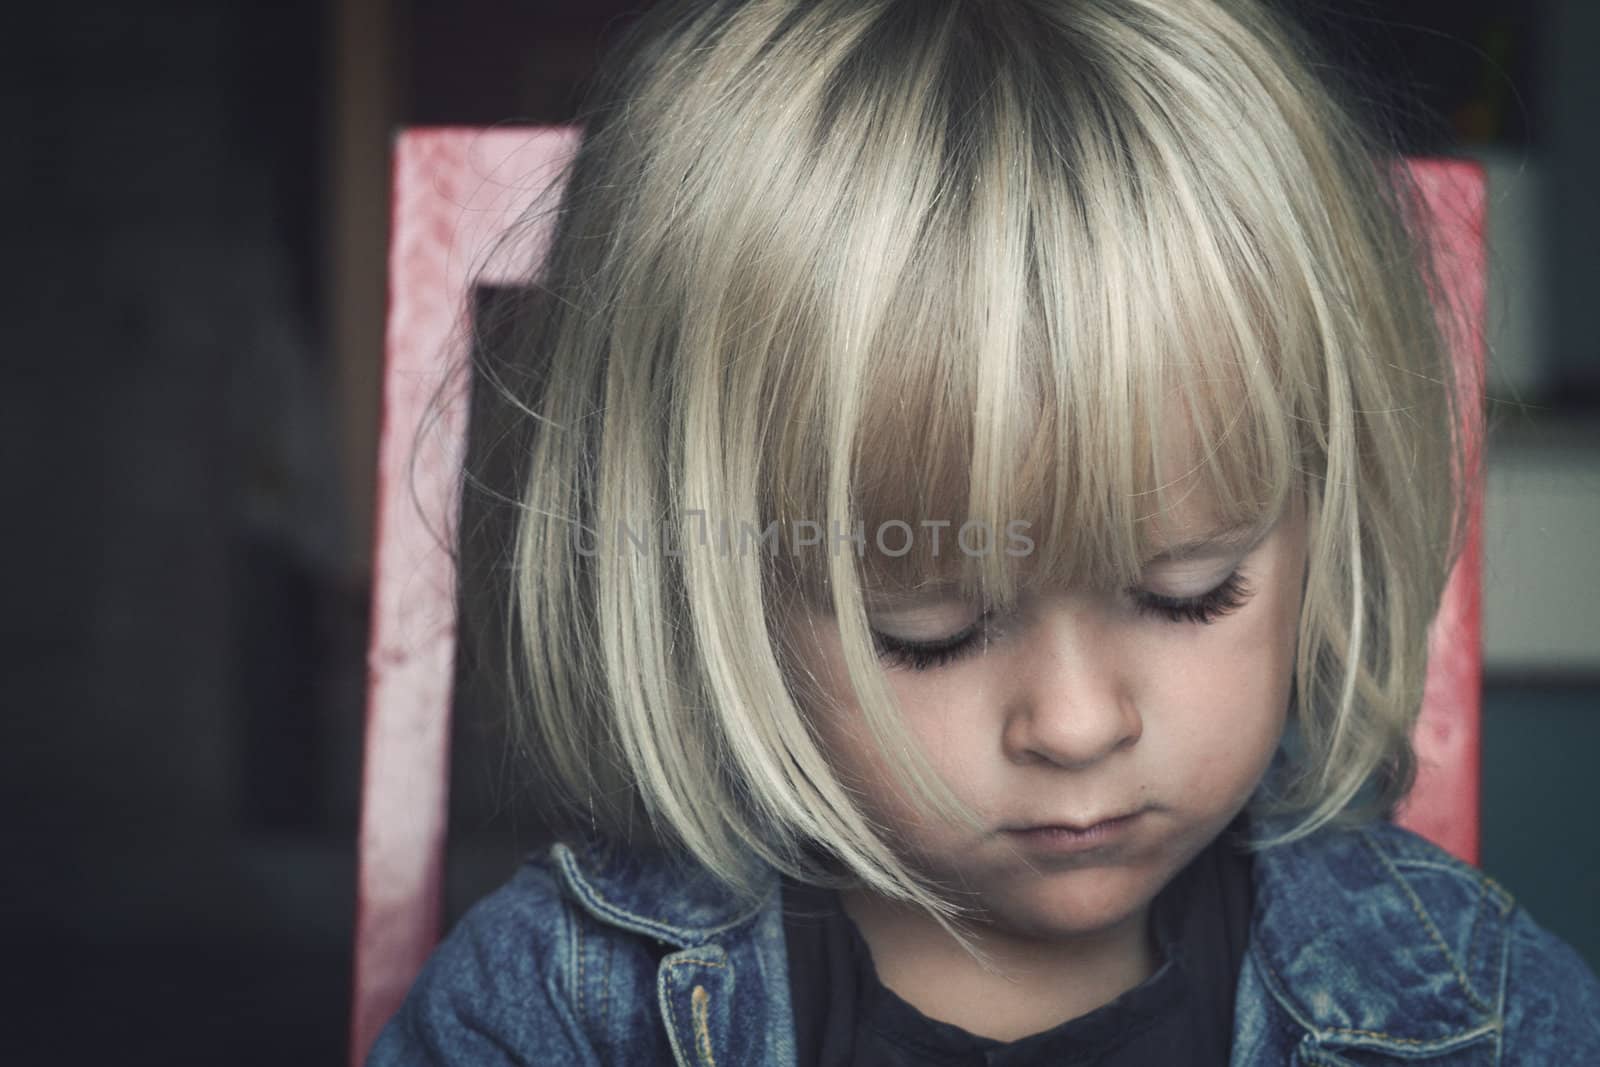 A sad child, not looking at camera